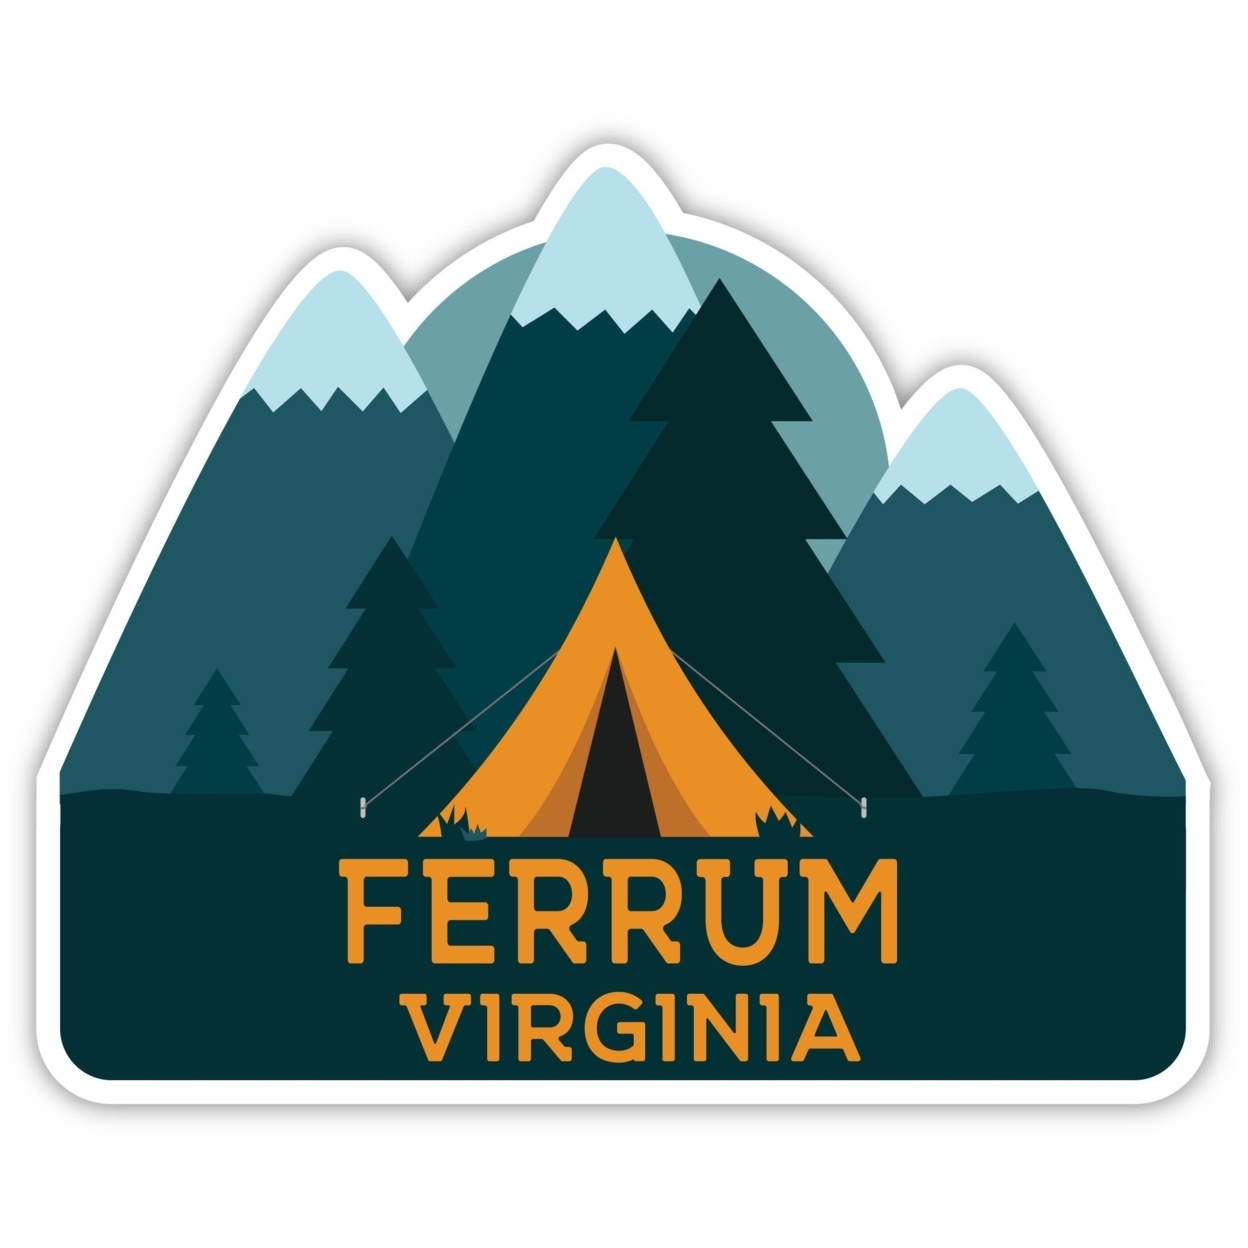 Ferrum Virginia Souvenir Decorative Stickers (Choose Theme And Size) - 4-Pack, 12-Inch, Tent